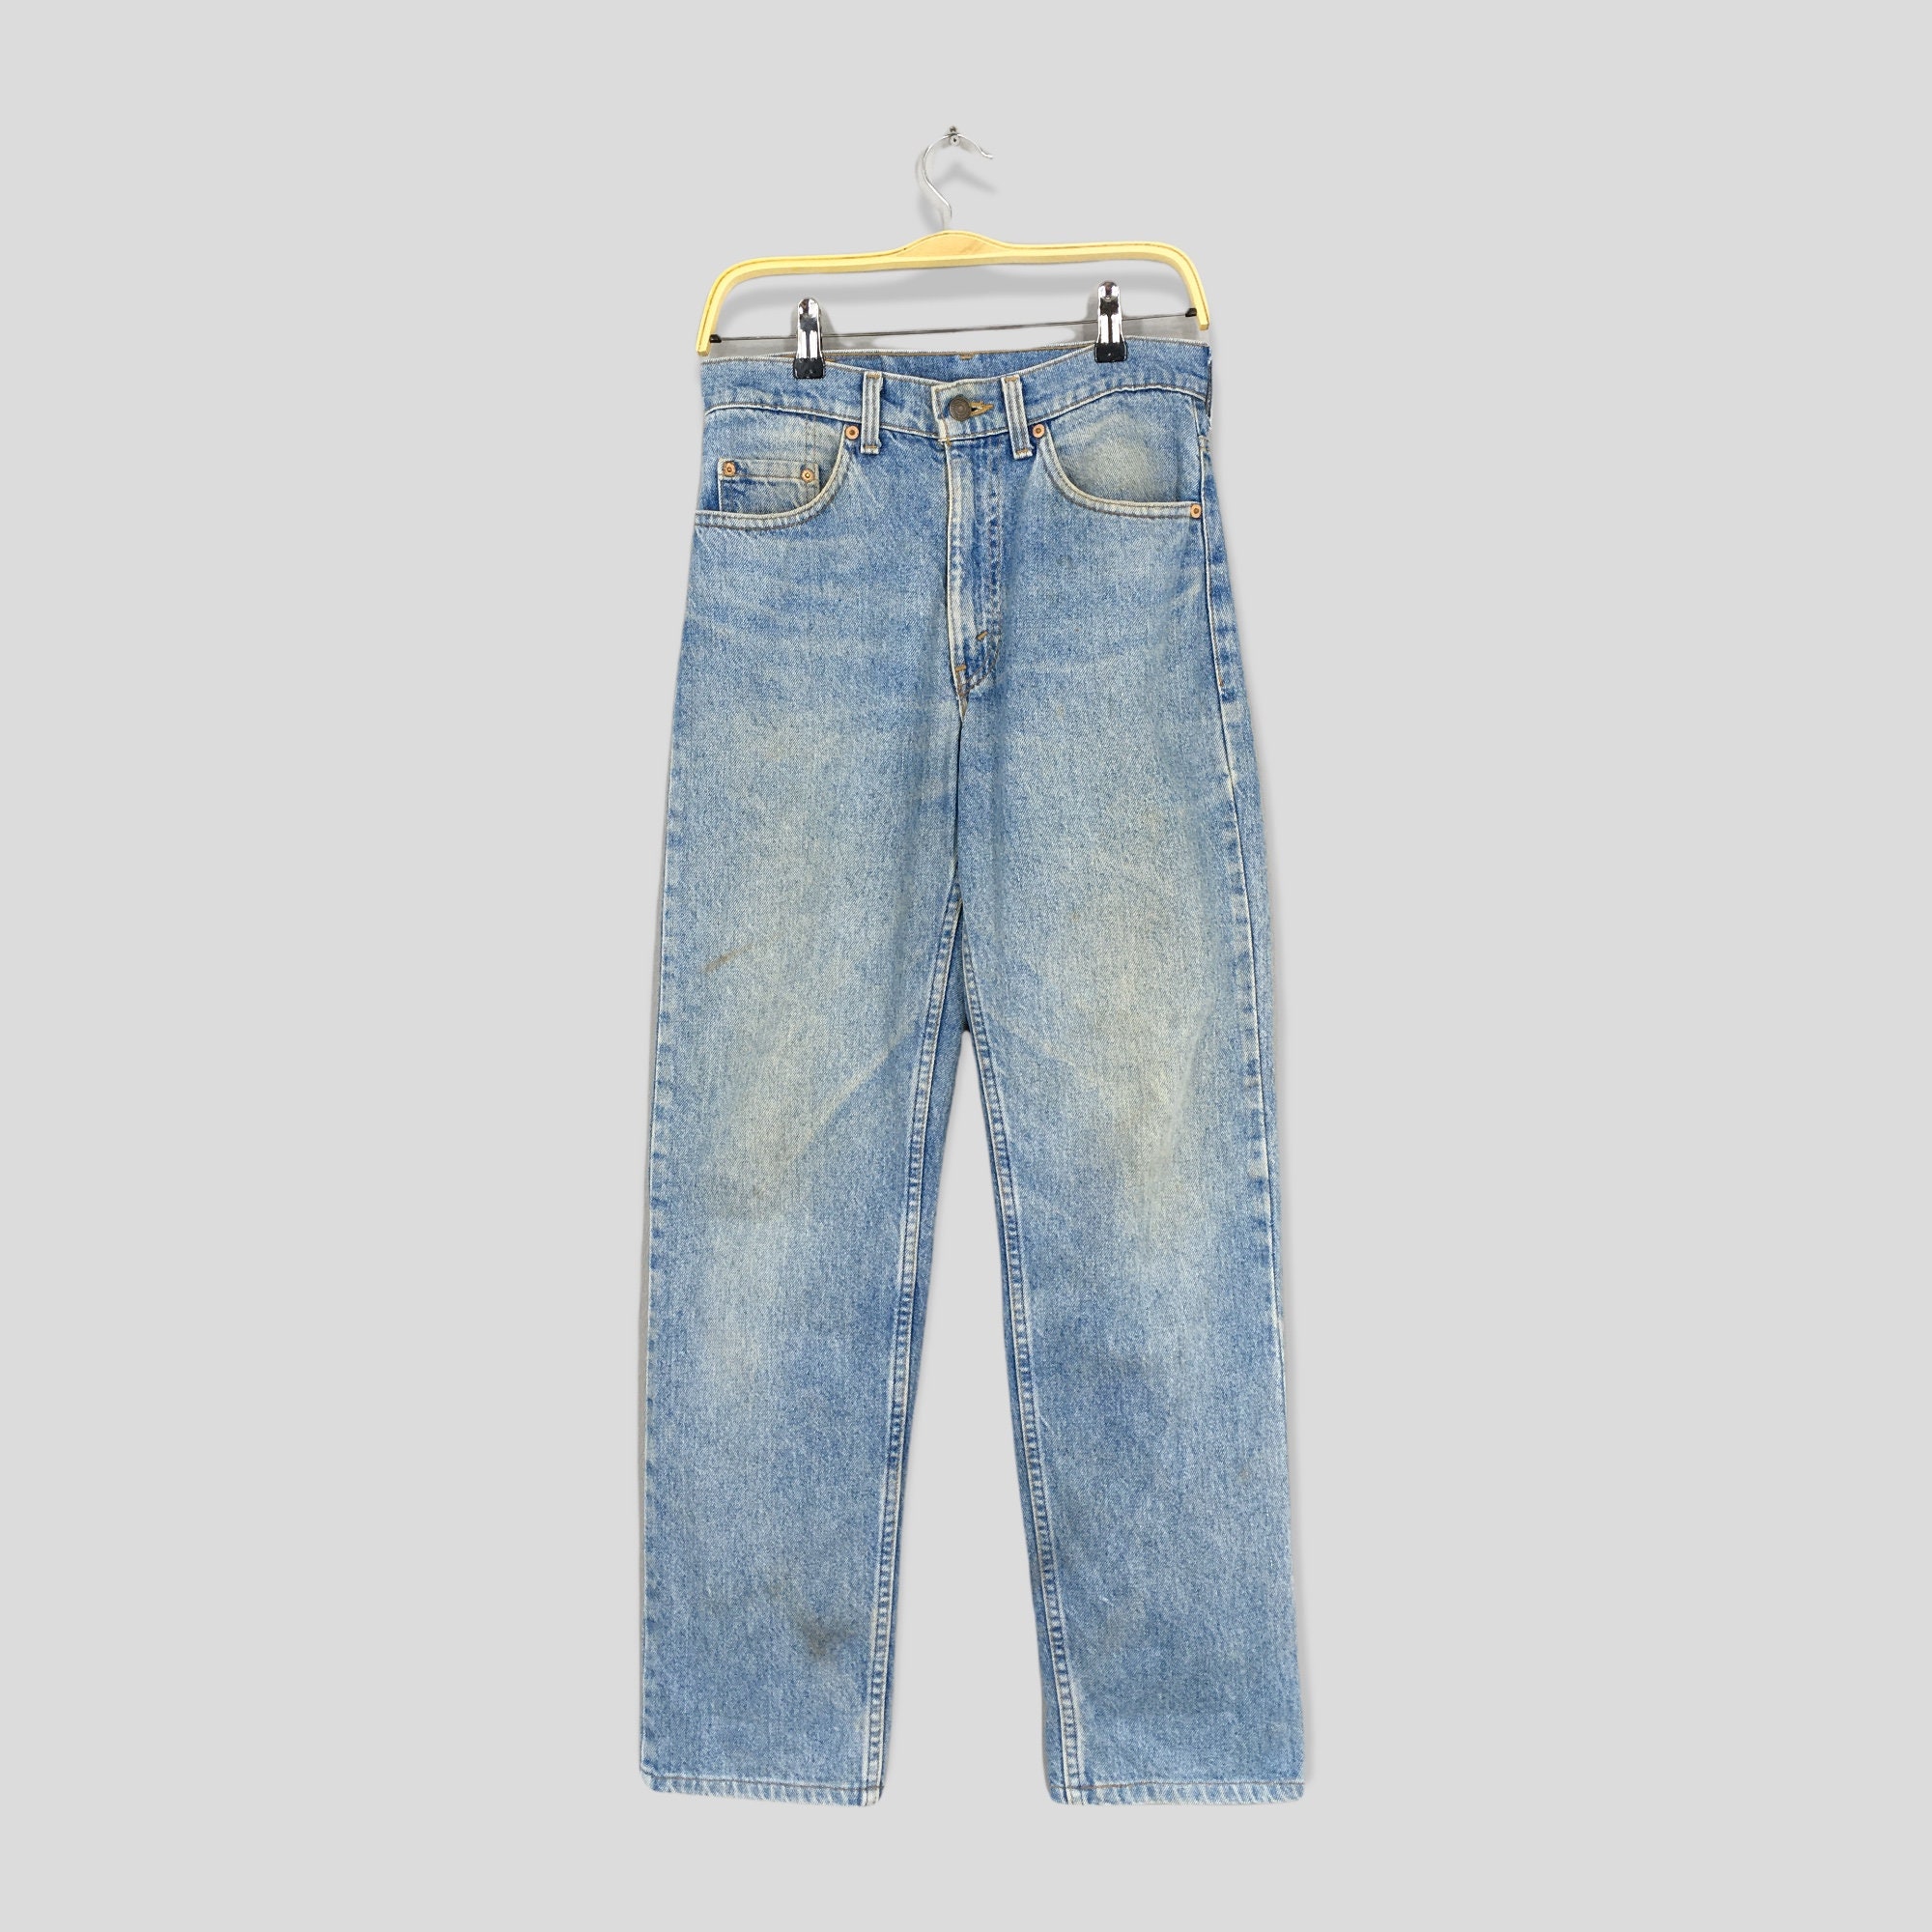 STREETURCHINVINTAGE Levi's 559 Men's Jeans Size 36 x 29 Medium Wash Jean Blue Denim Destroyed